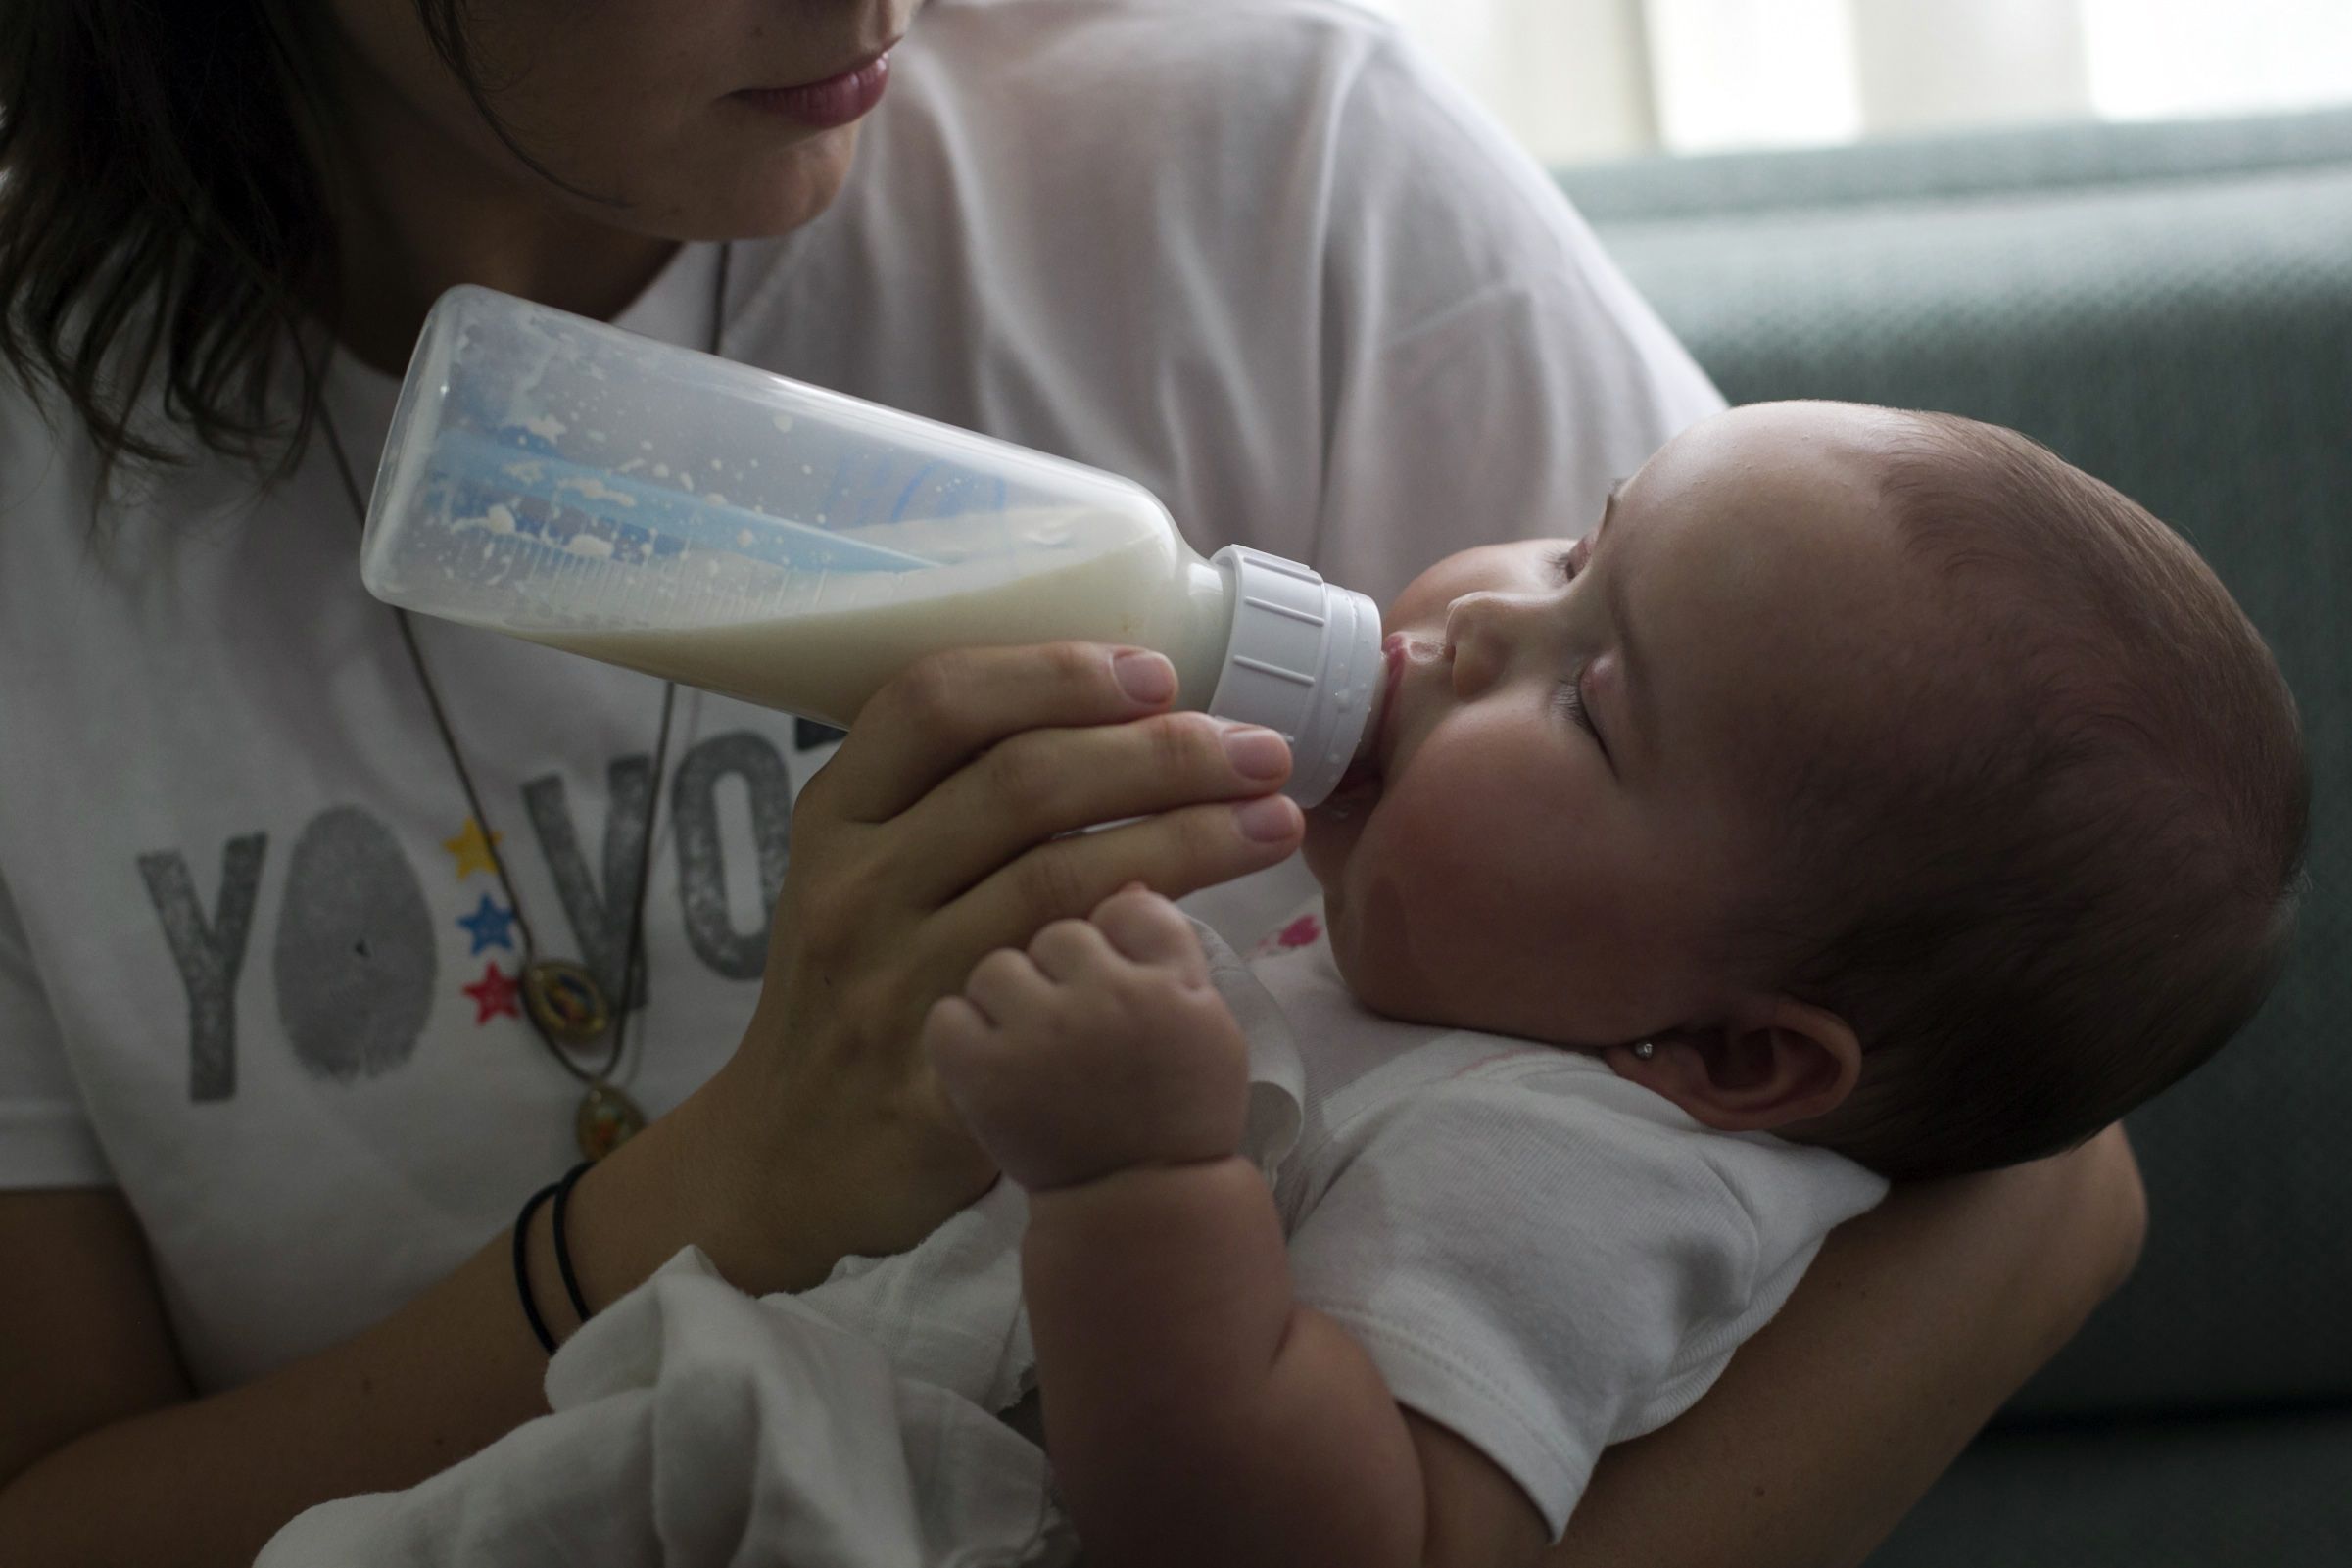 Man tasting breast milk stories